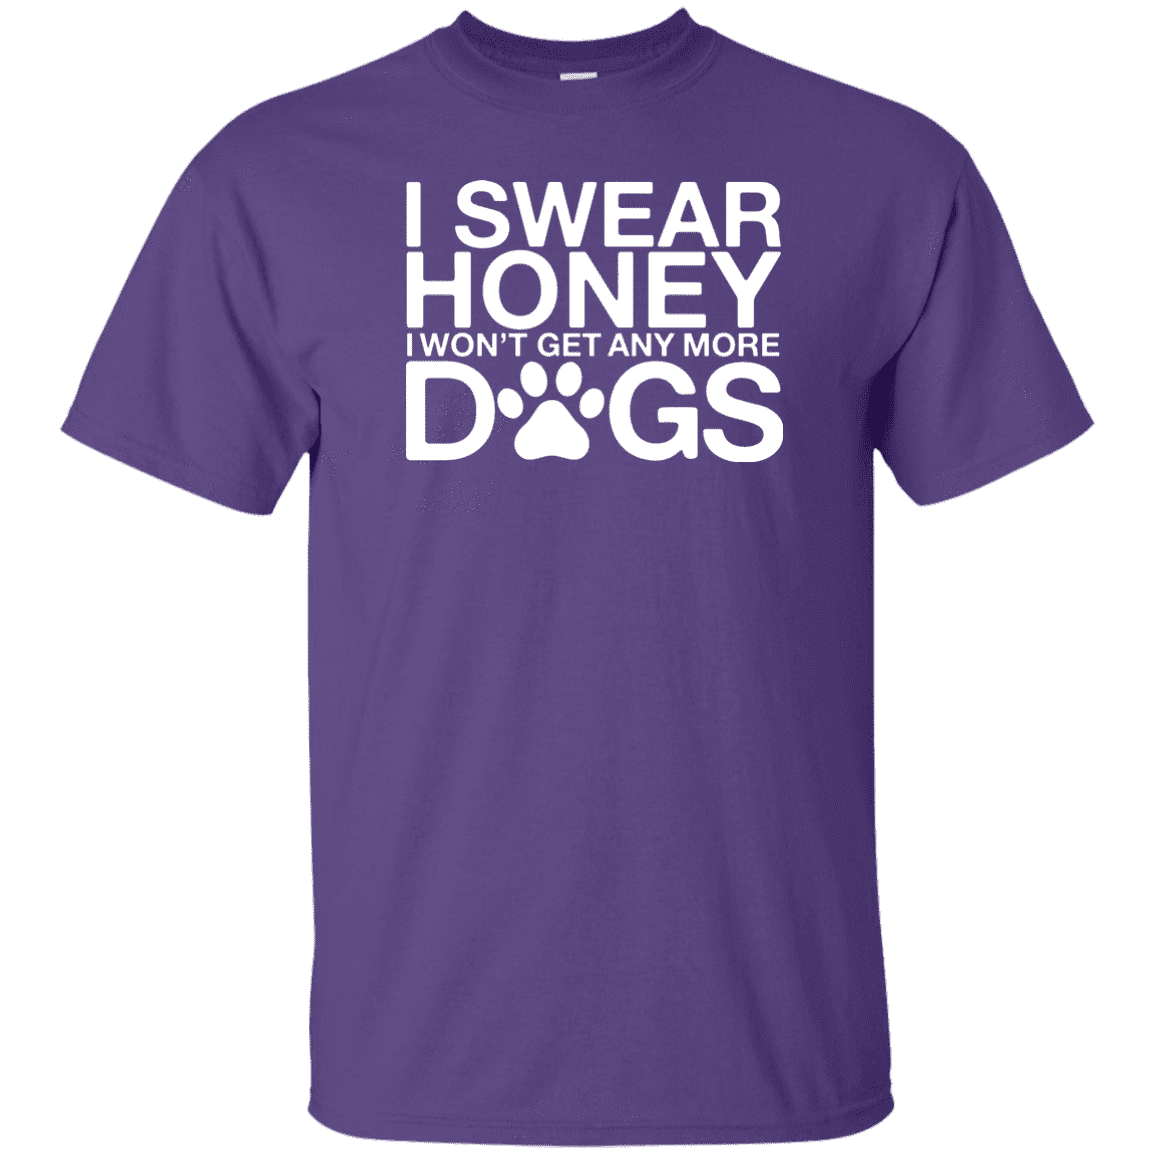 I Swear No More Dogs- T-Shirt.